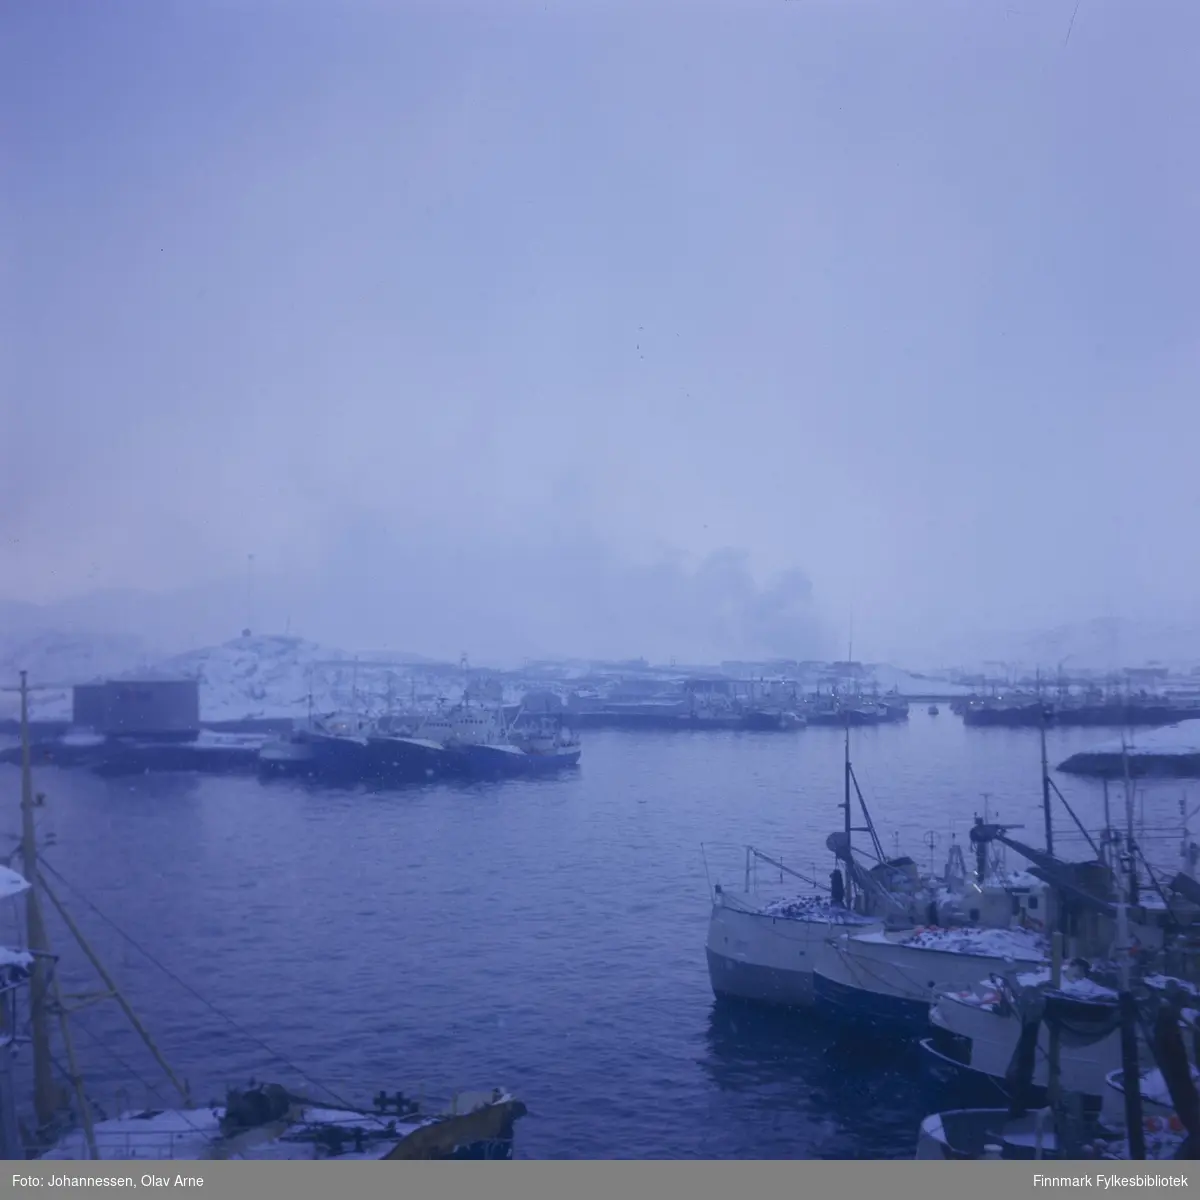 Båtsfjord havn

I bakgrunnen til venstre kan man se en silo med tekst: MOBIL 

Foto trolig tatt på 1960/70-tallet